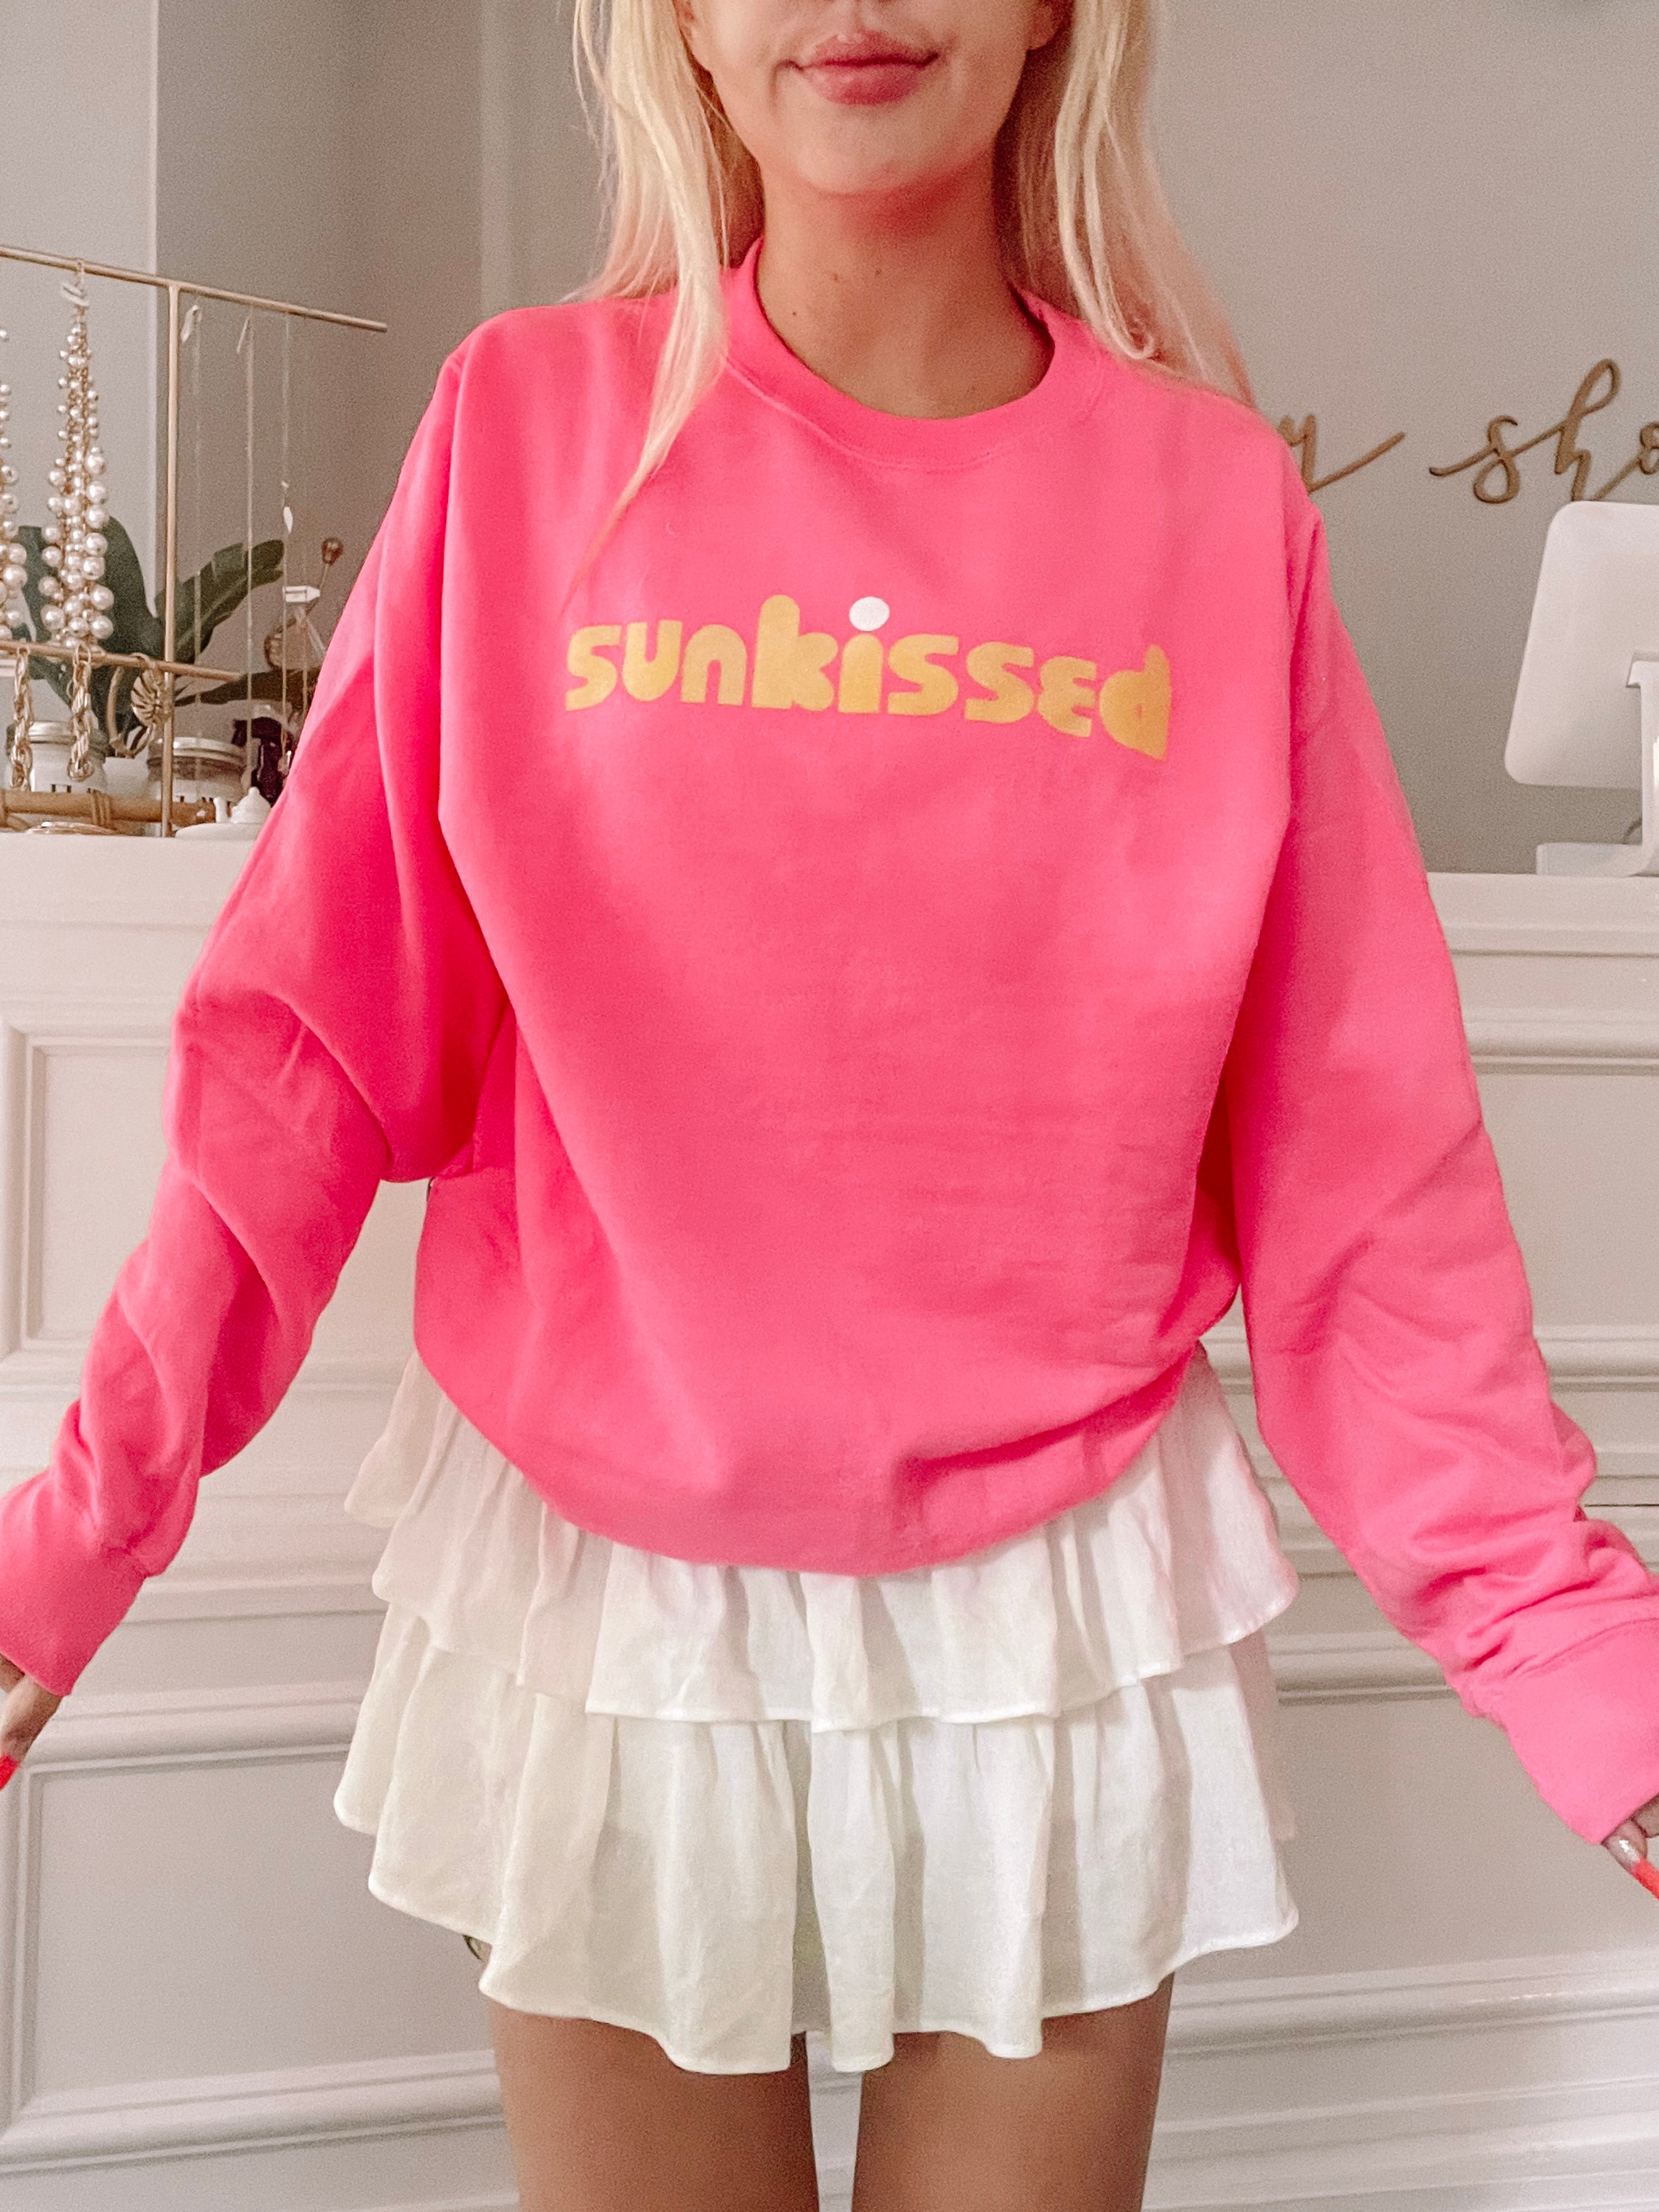 Sunkissed Sweatshirt | sassyshortcake.com